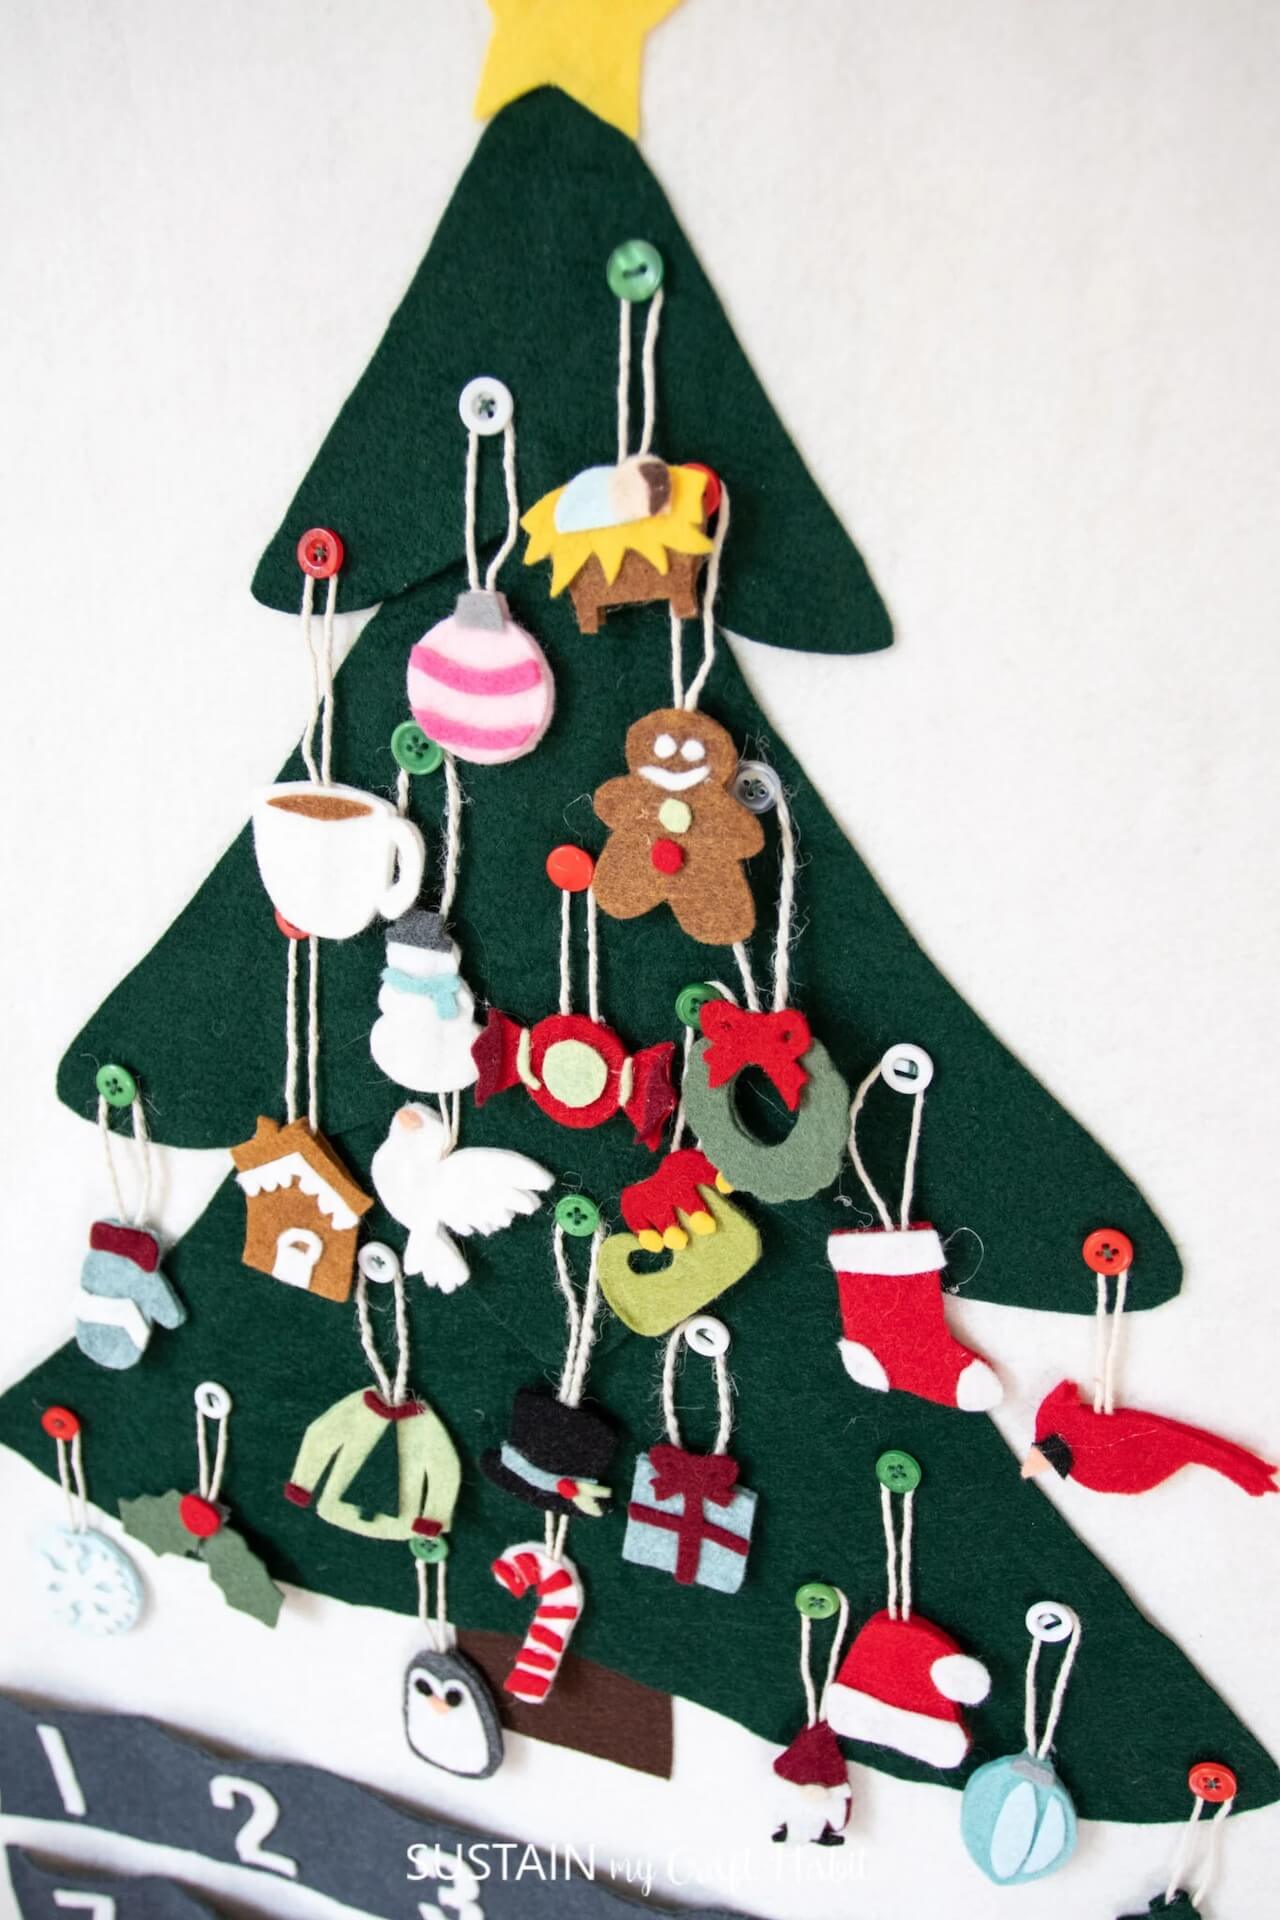 Diy felt advent calendar shaped like a christmas tree with decorations.